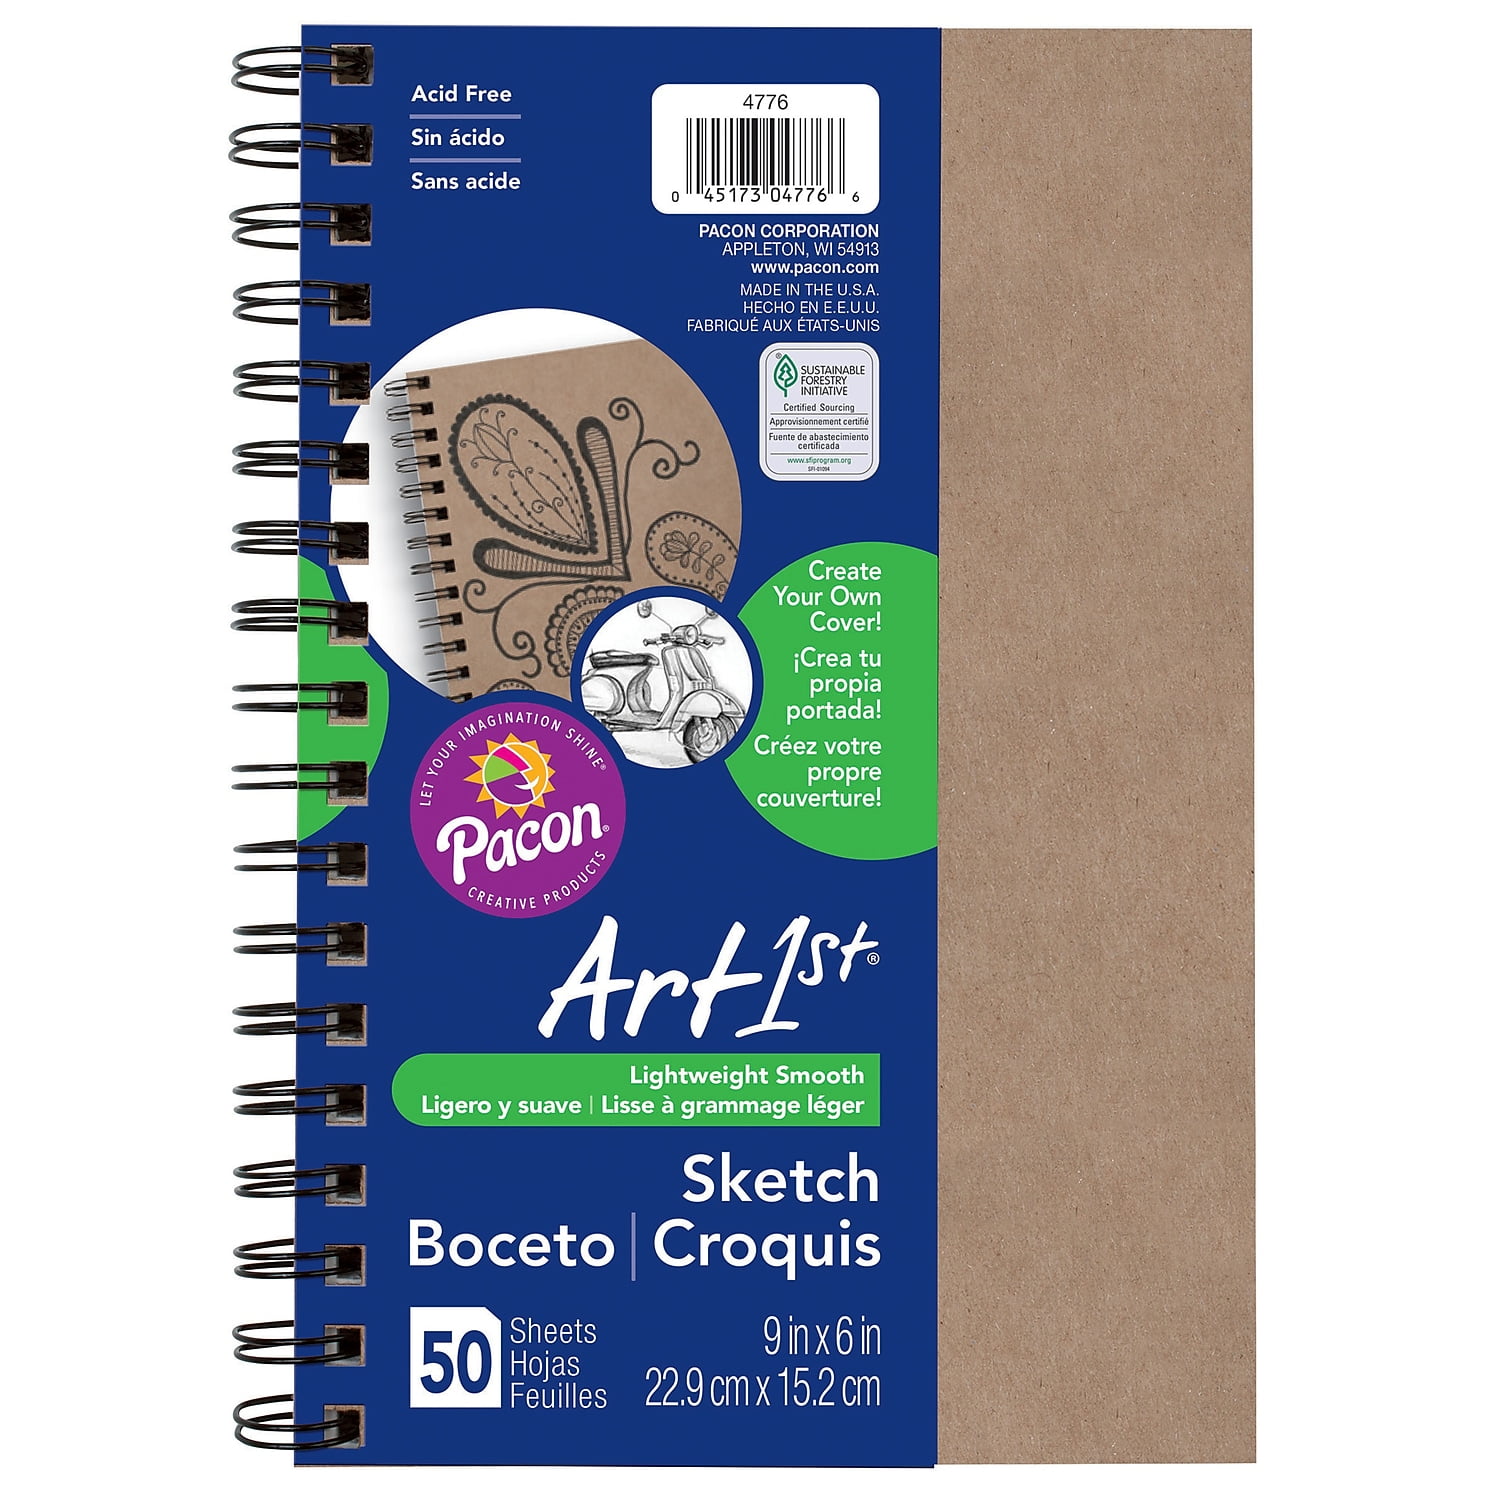 WA Portman A5 Sketchbook, 160 Page Sketch Journal (5.8 x 8.3